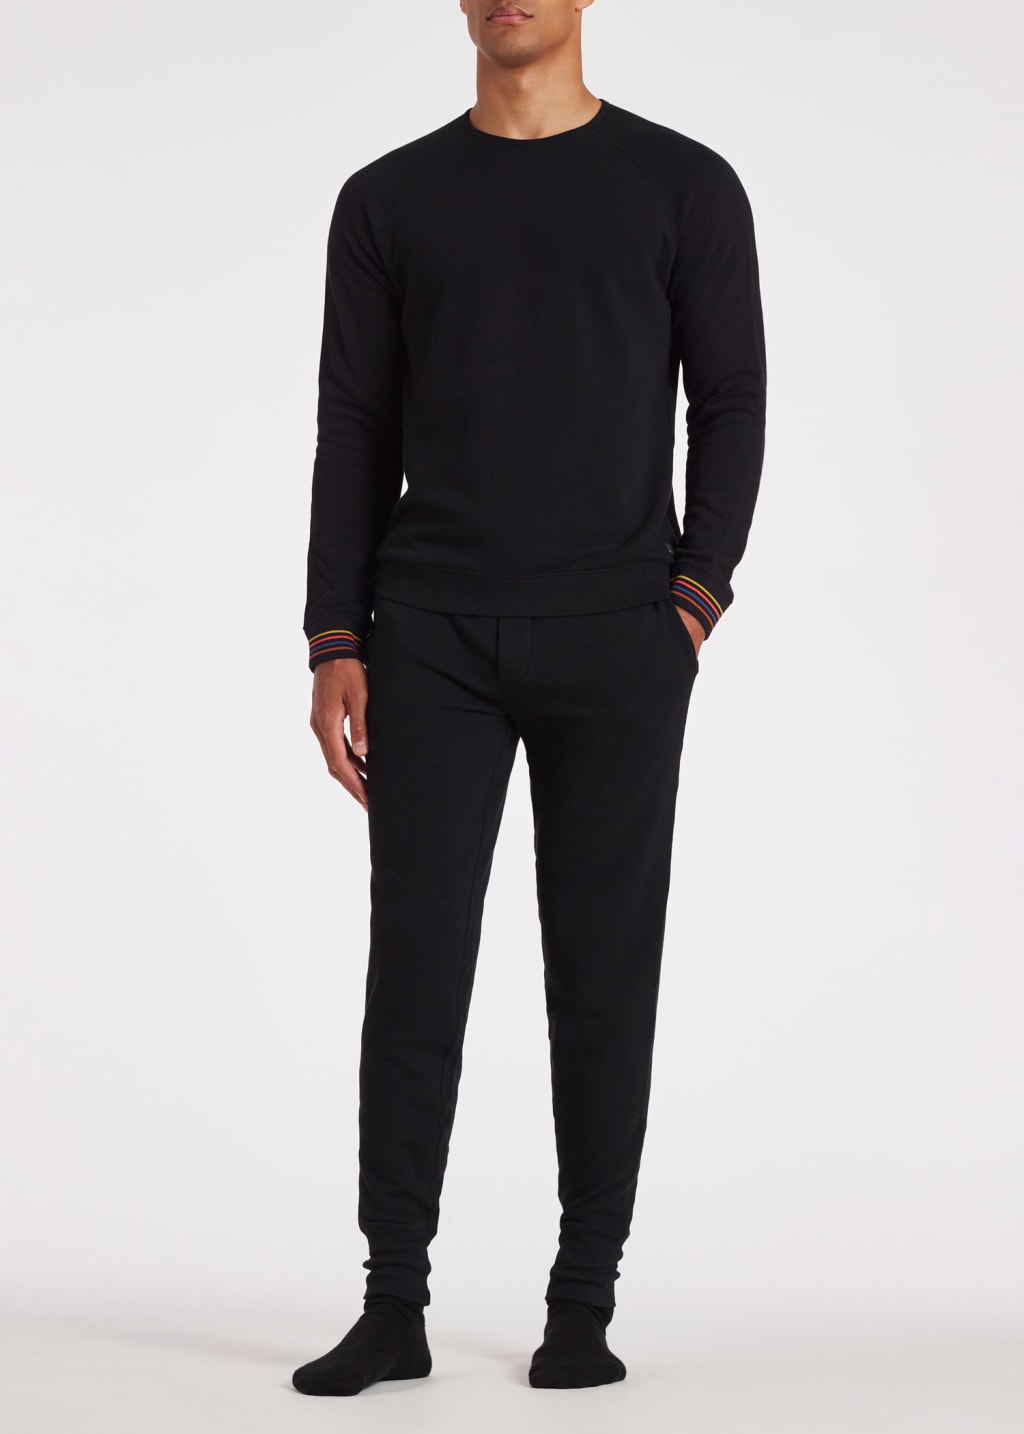 Model View - Black Cotton 'Artist Stripe' Cuff Long-Sleeve Lounge Top Paul Smith